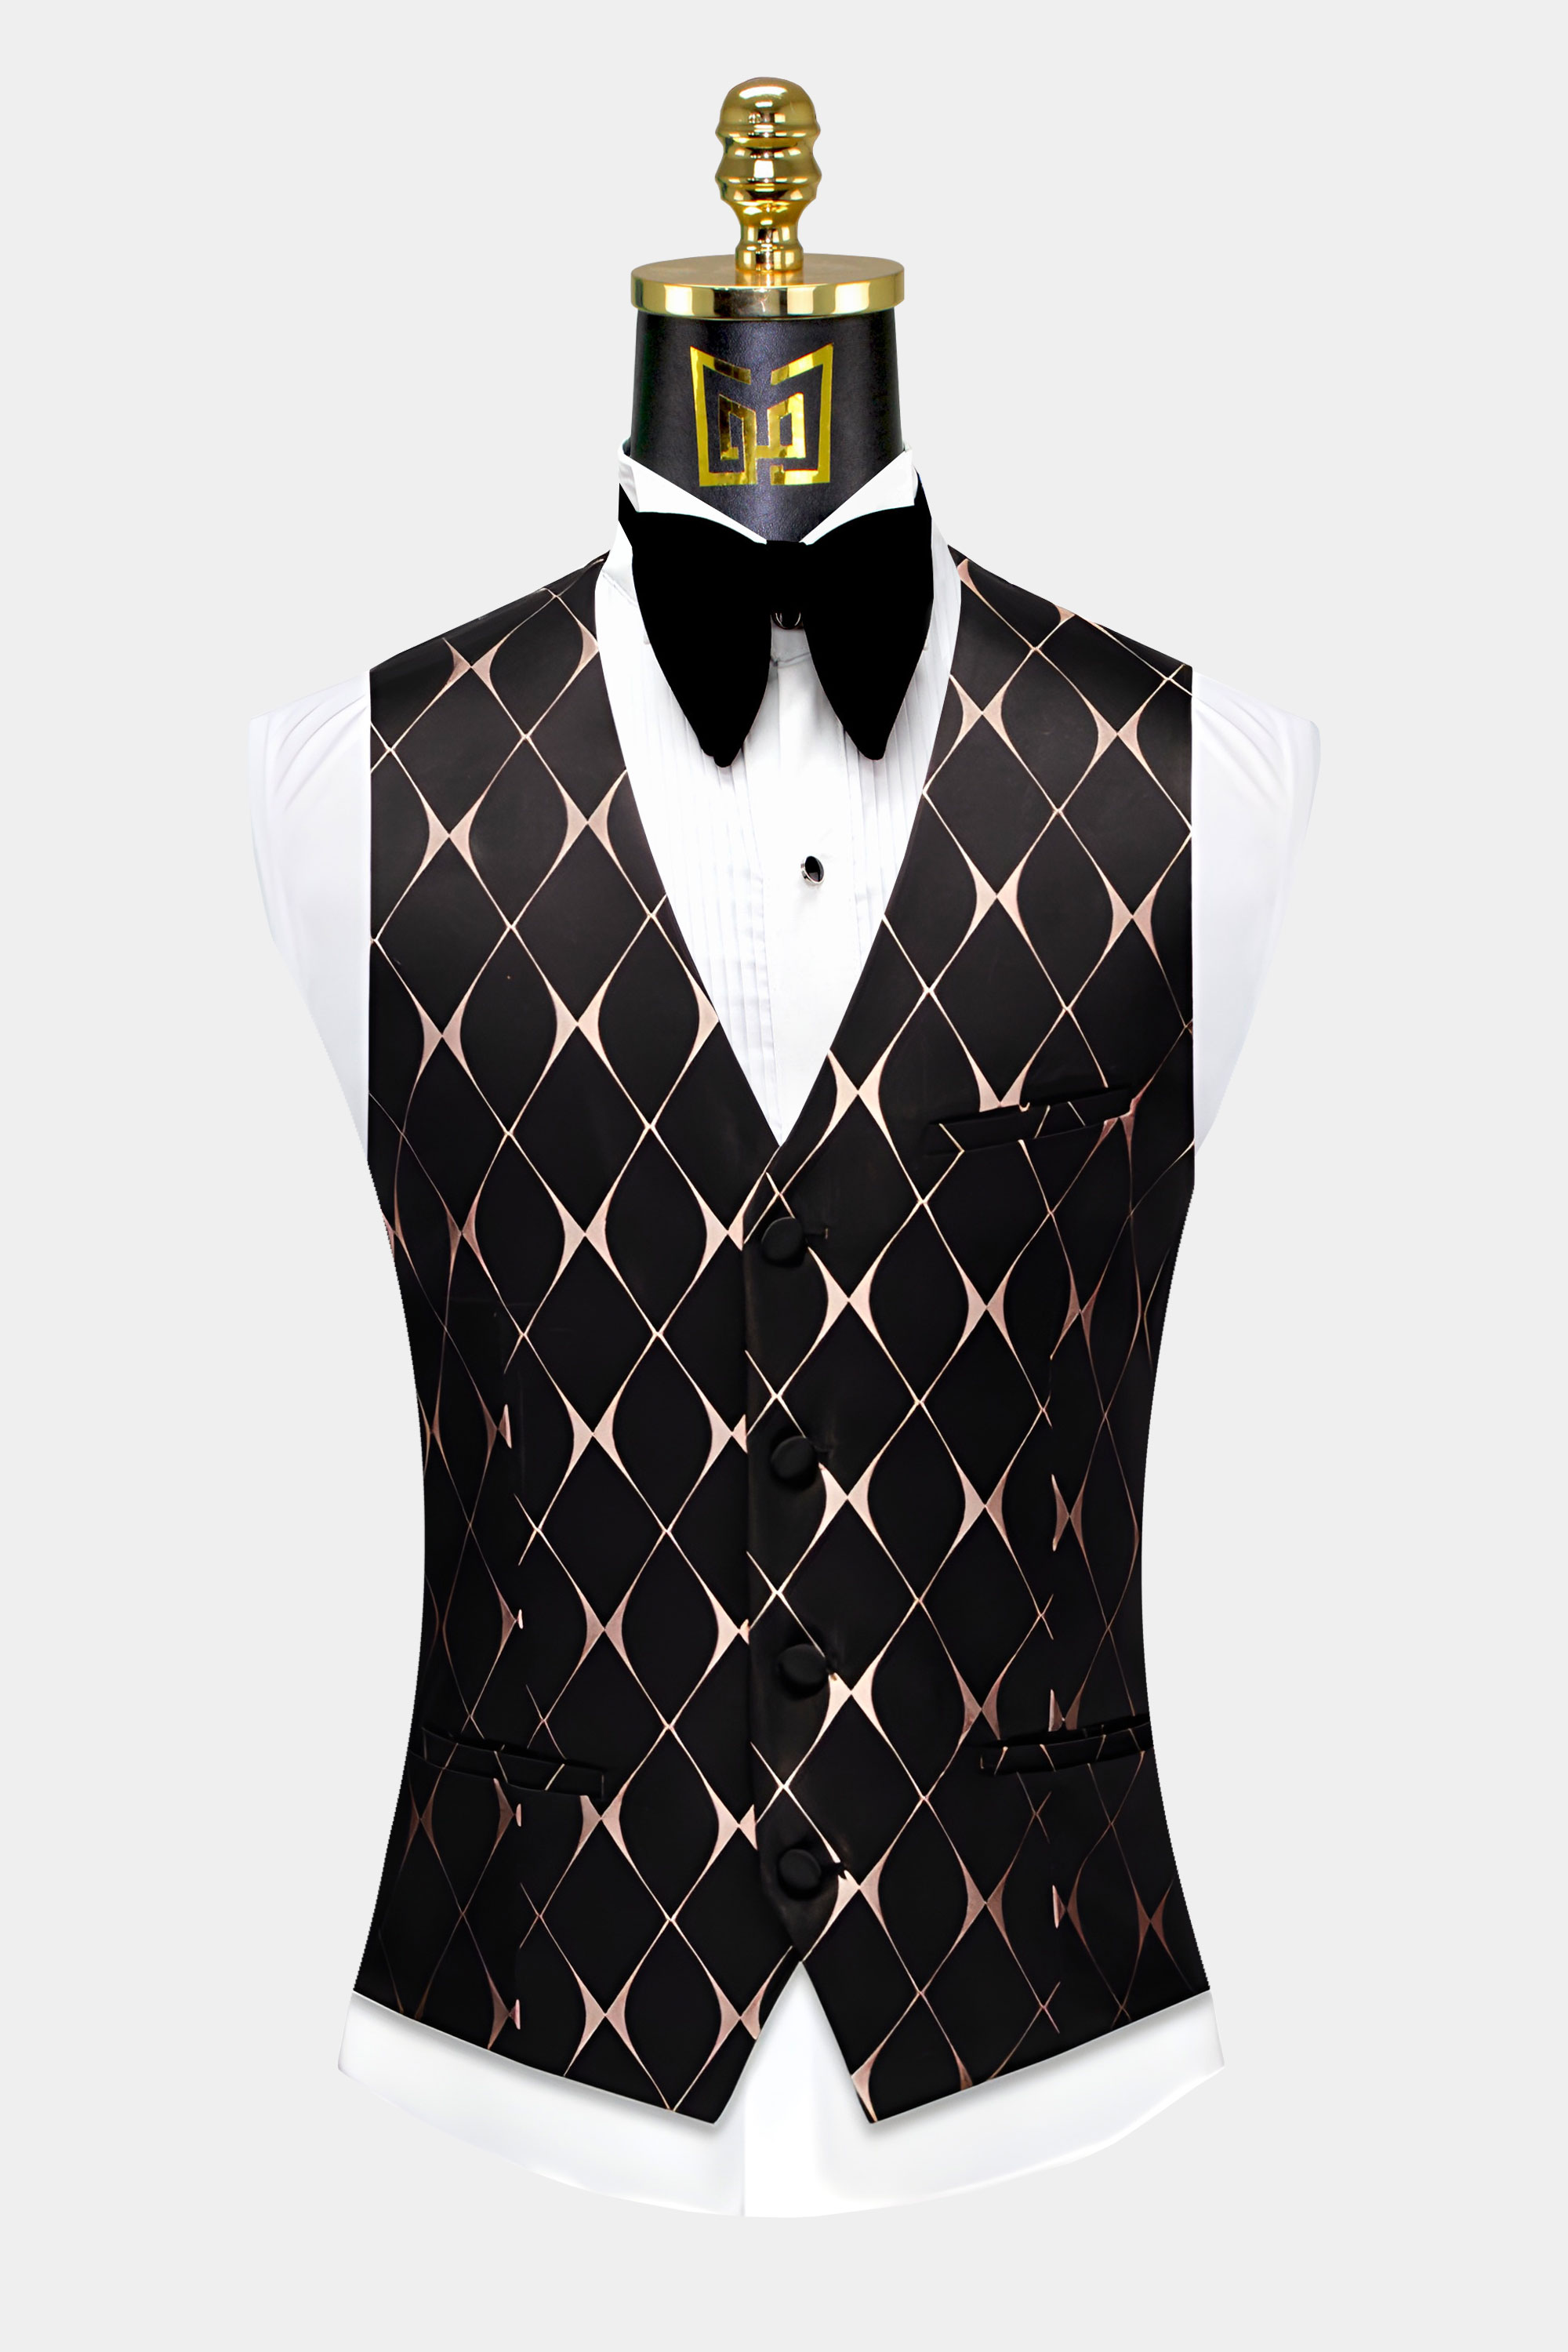 Black-and-Rose-Gold-Tuxedo-Vest-from-Gentlemansguru.com